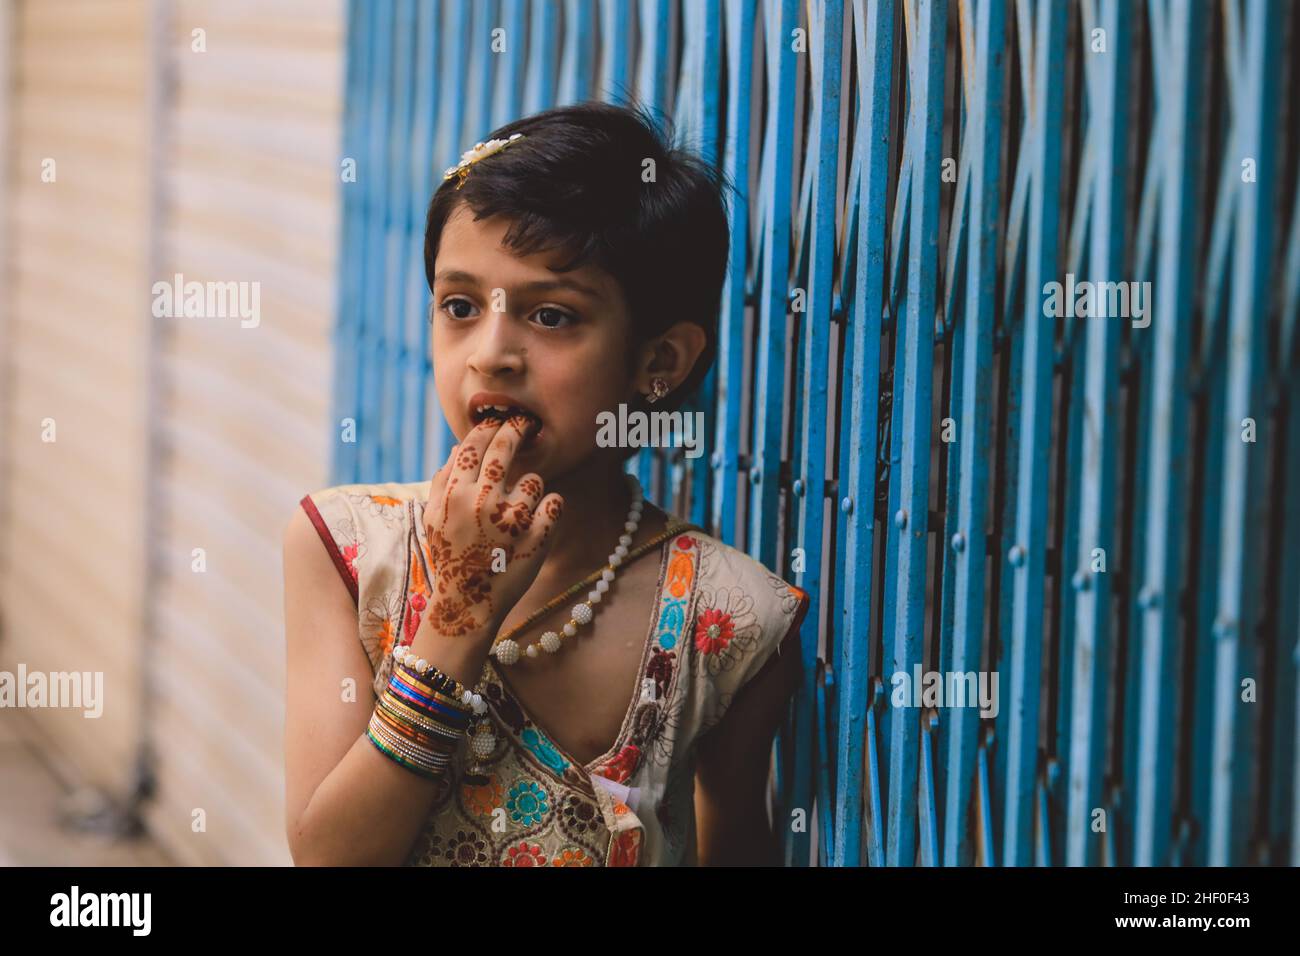 Peshawar, Pakistan - June 08, 2020: Smiling Pakistani Girl with Cut Dark Hair and Colorful Dress Stock Photo